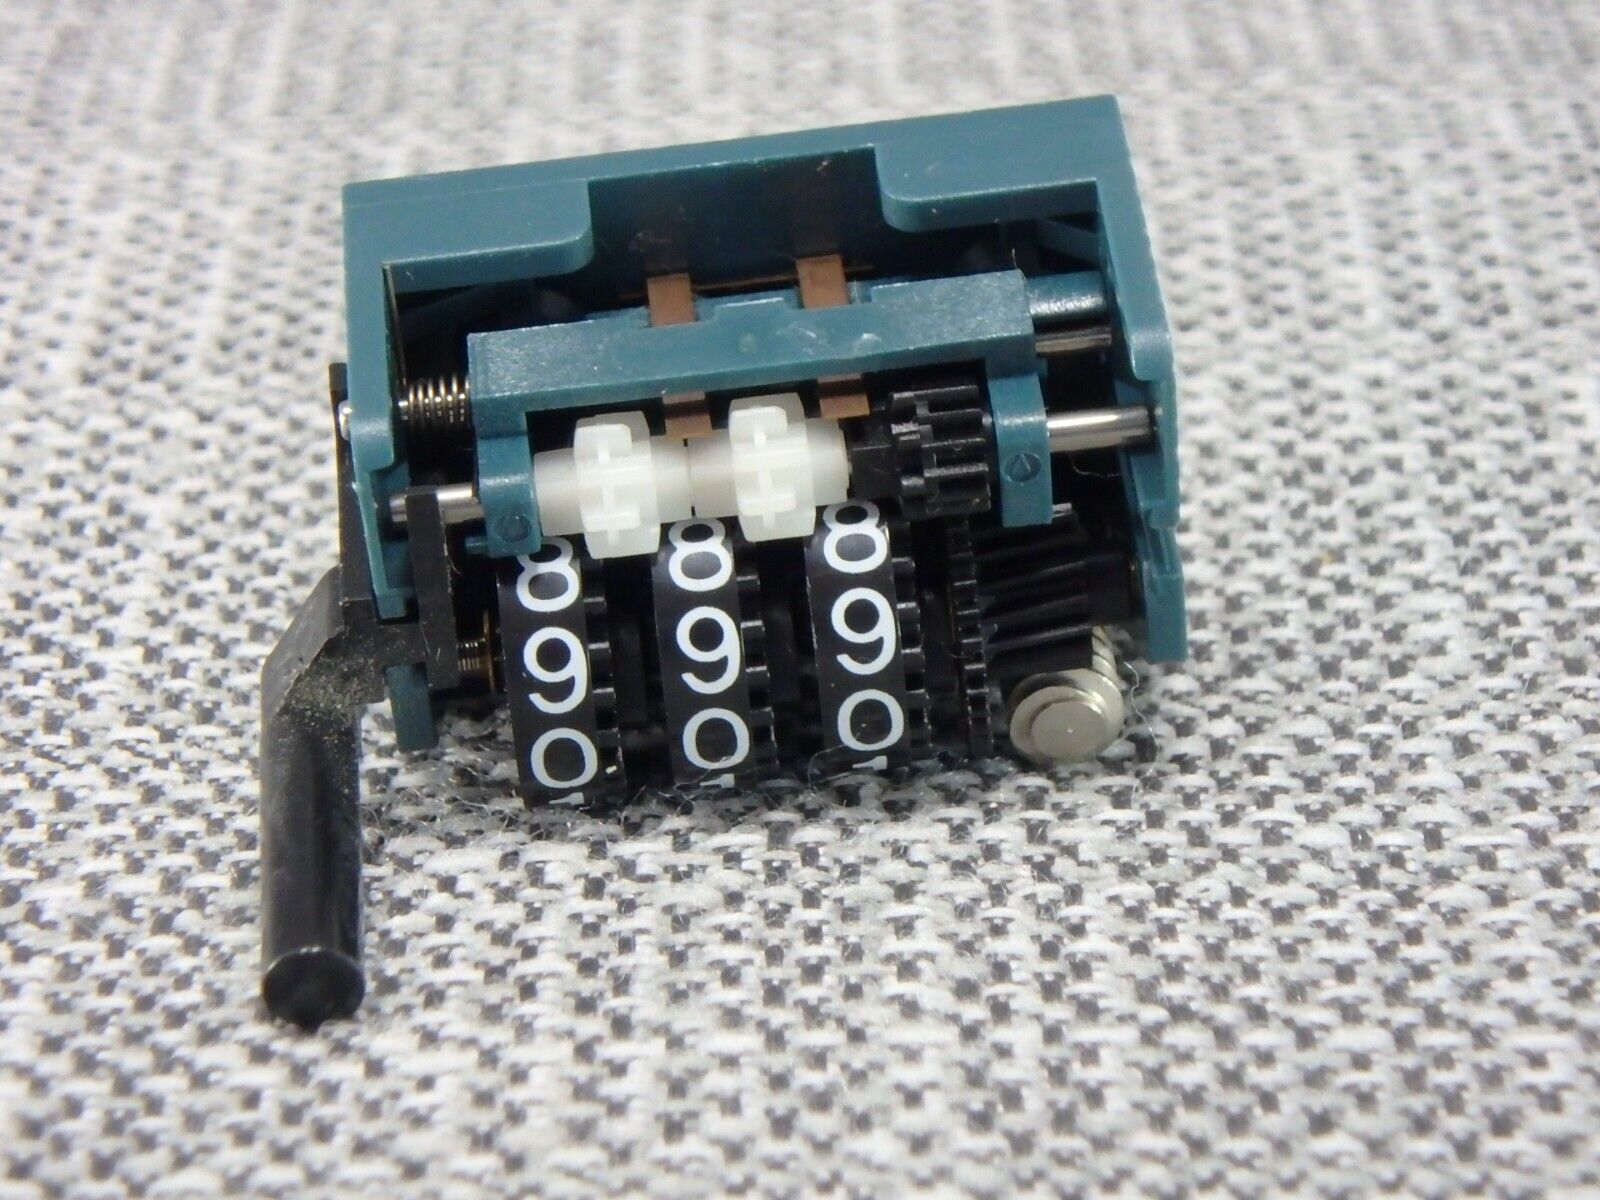 Vintage Atari 410 Cassette Program Recorder Parts Replacement Counter Timer